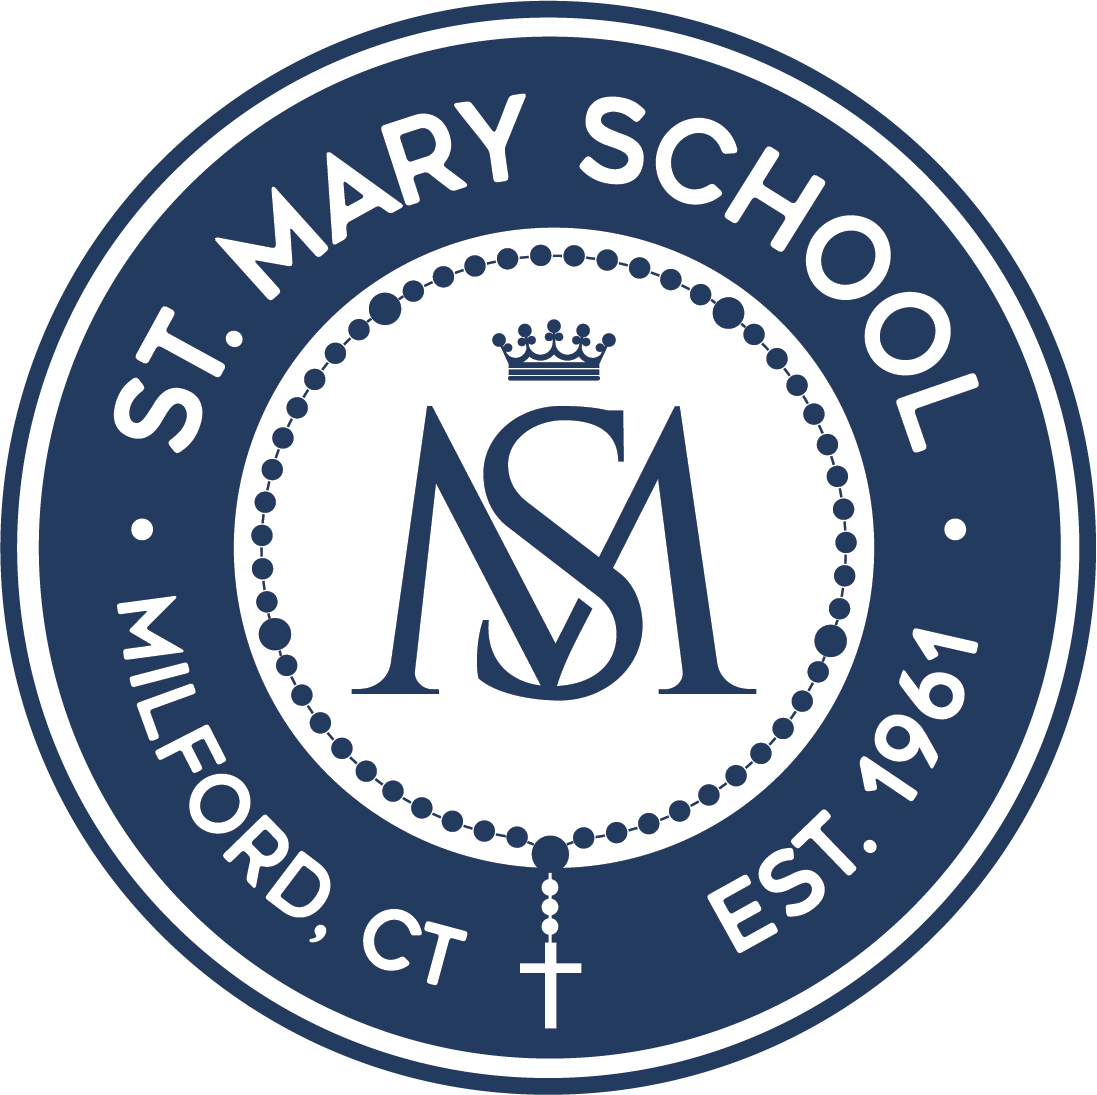 Saint Mary School